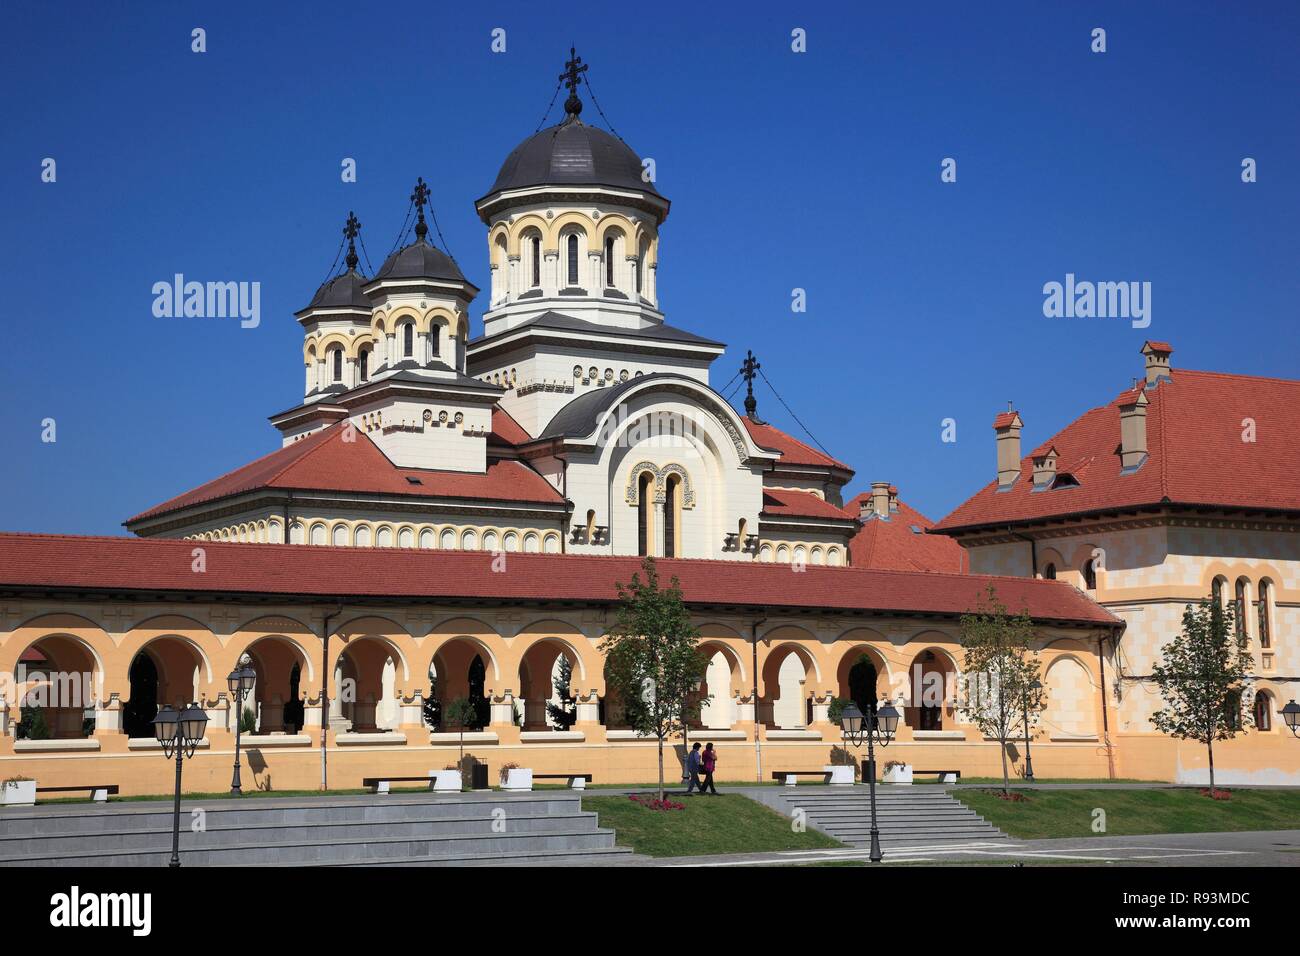 Coronation Church of the Romanian Orthodox Church, Alba Iulia, Balgrad, deutsch Karlsburg, Alba Iulia, Bălgrad, Karlsburg Stock Photo